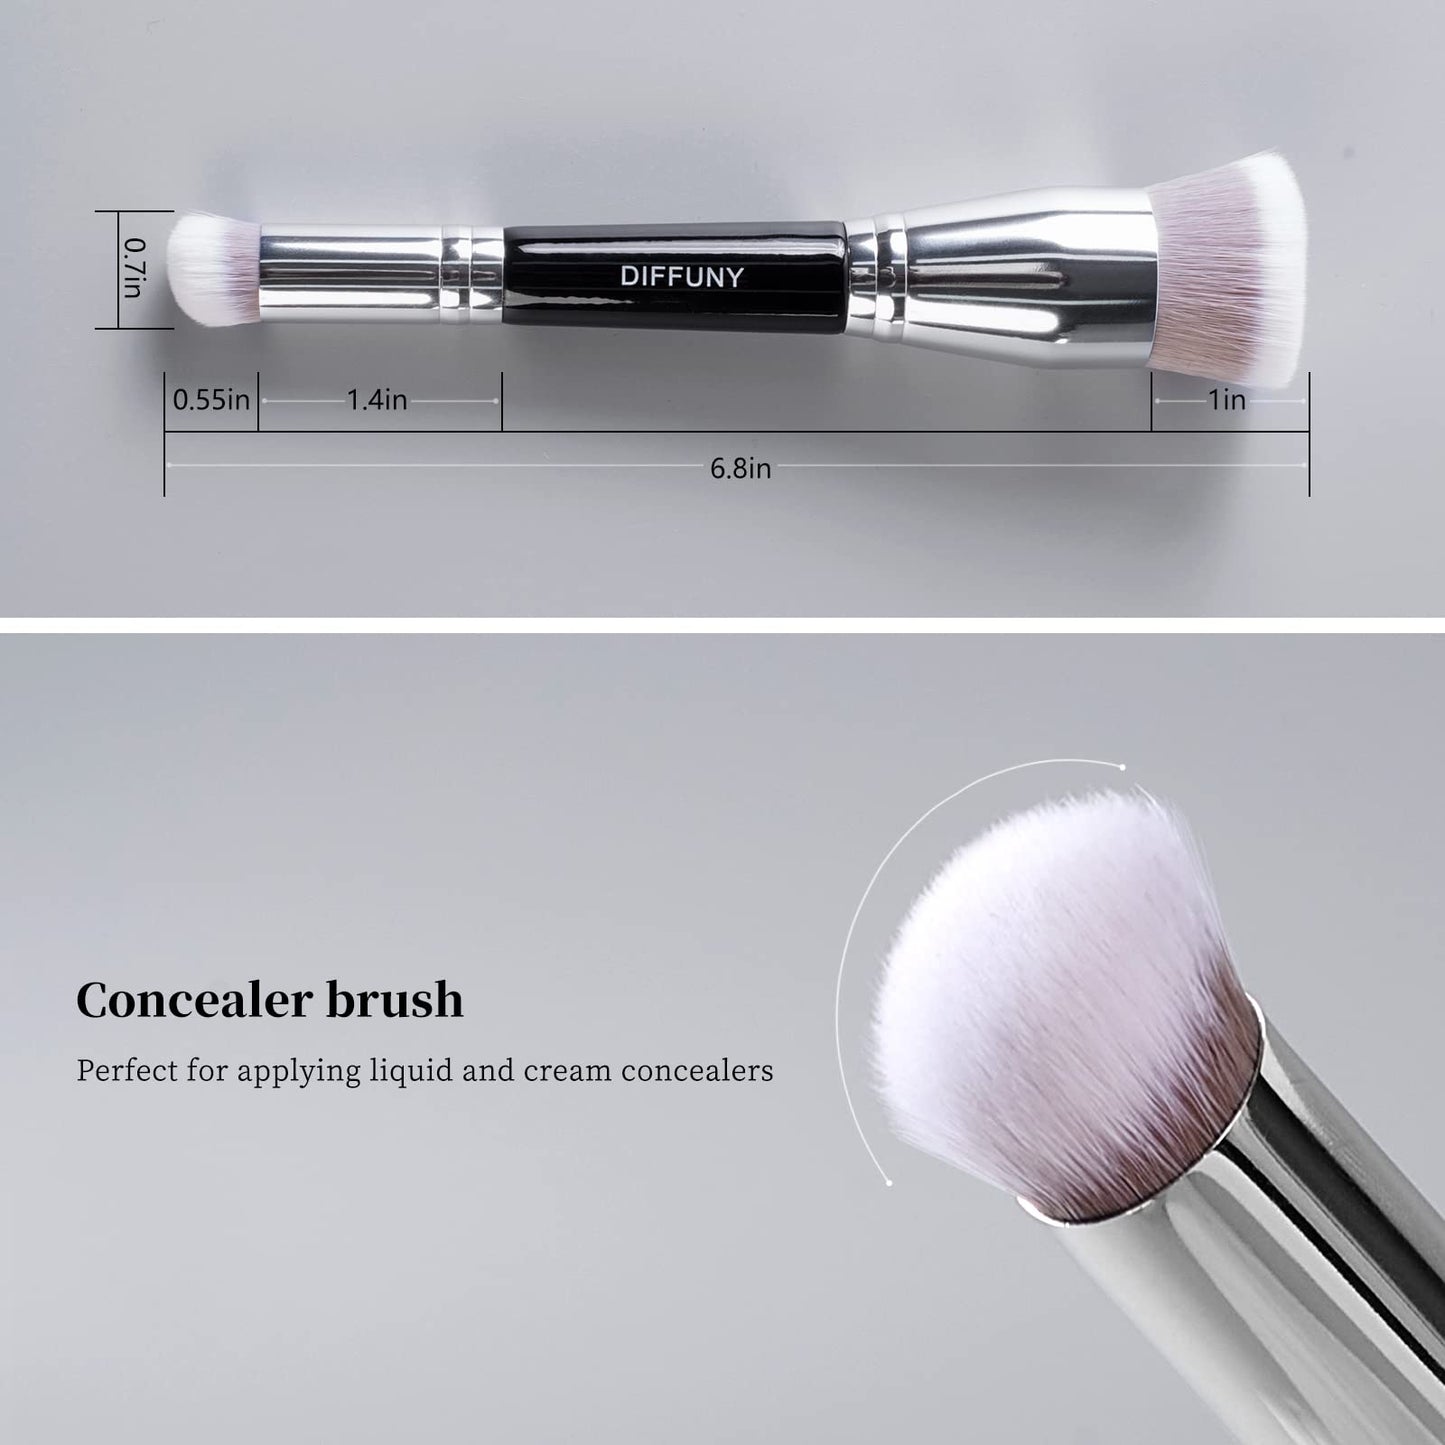 DIFFUNY Large Makeup Brushes Double Ended Foundation Brush & Concealer Brush, Flat Top Kabuki Foundation Brush for Liquid, Cream, Blending, Buffing, Concealer, Dual Sided Make Up Brushes